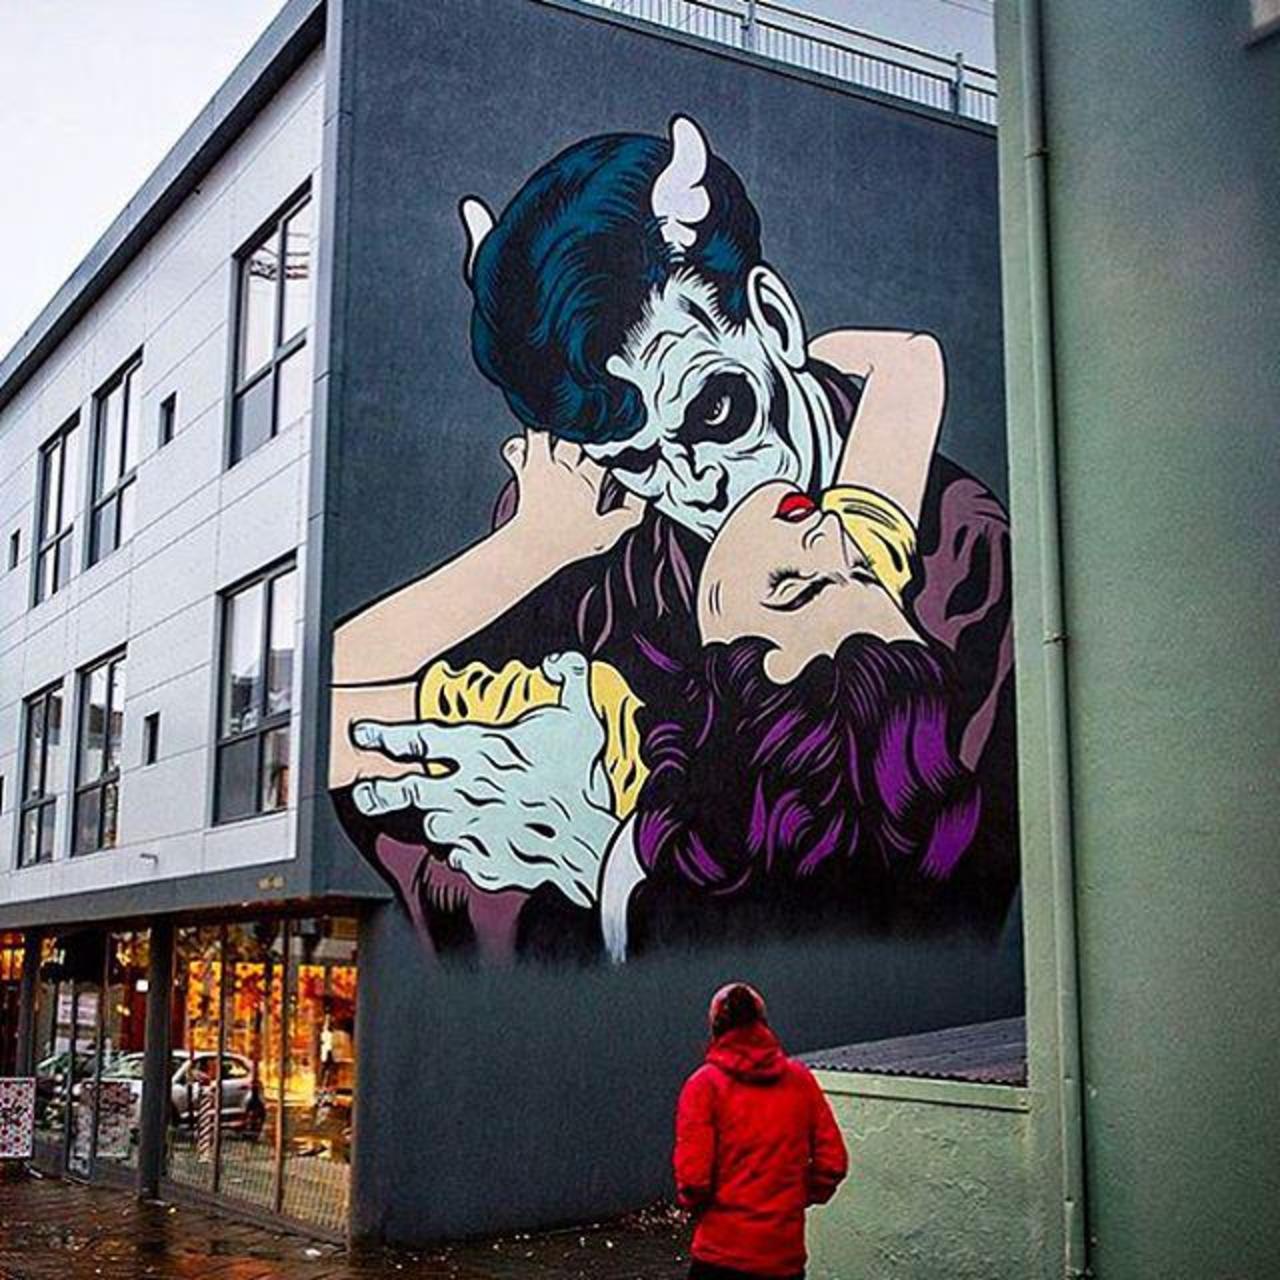 D*Face unveiled a new mural in Reykjavik, Iceland. #StreetArt #Graffiti #Mural http://t.co/G3ts4MLBOn